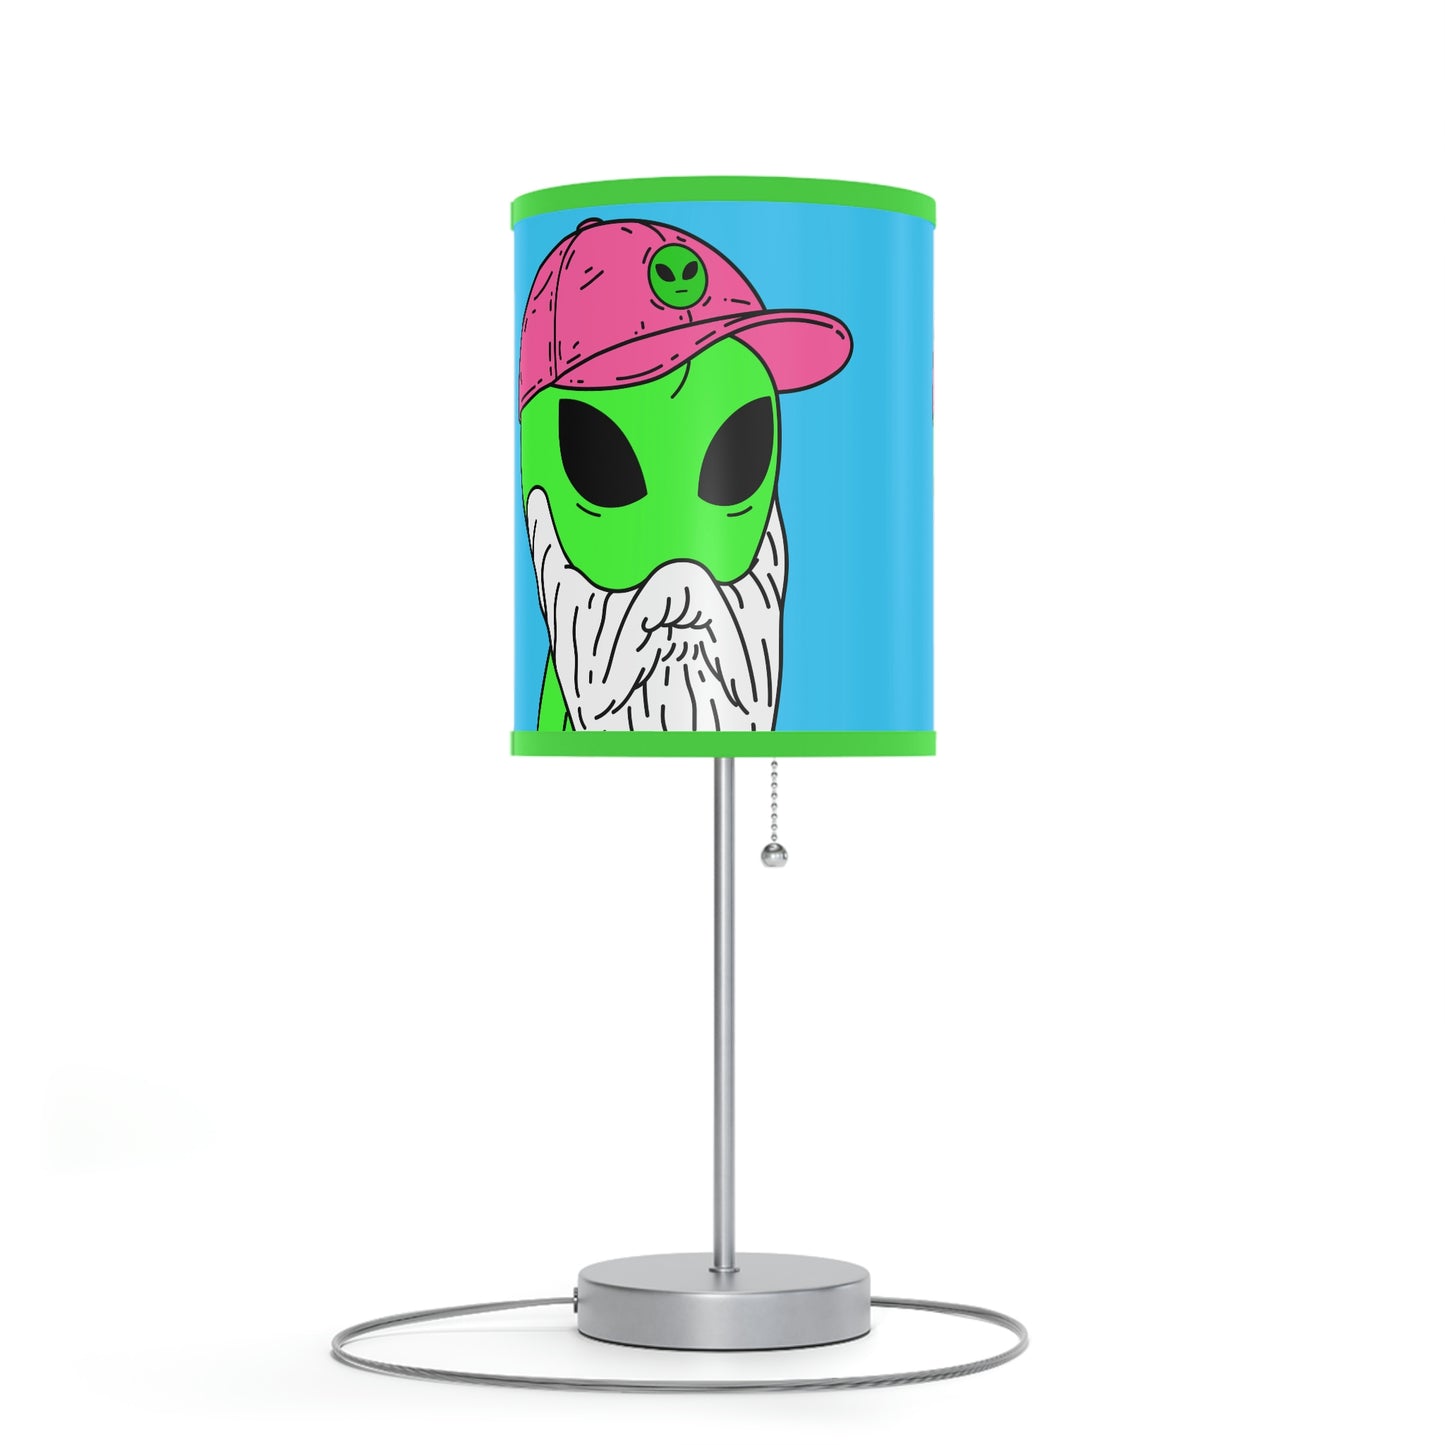 Alien Old Man Wizard Beard Visitor Cartoon Lamp on a Stand, US|CA plug